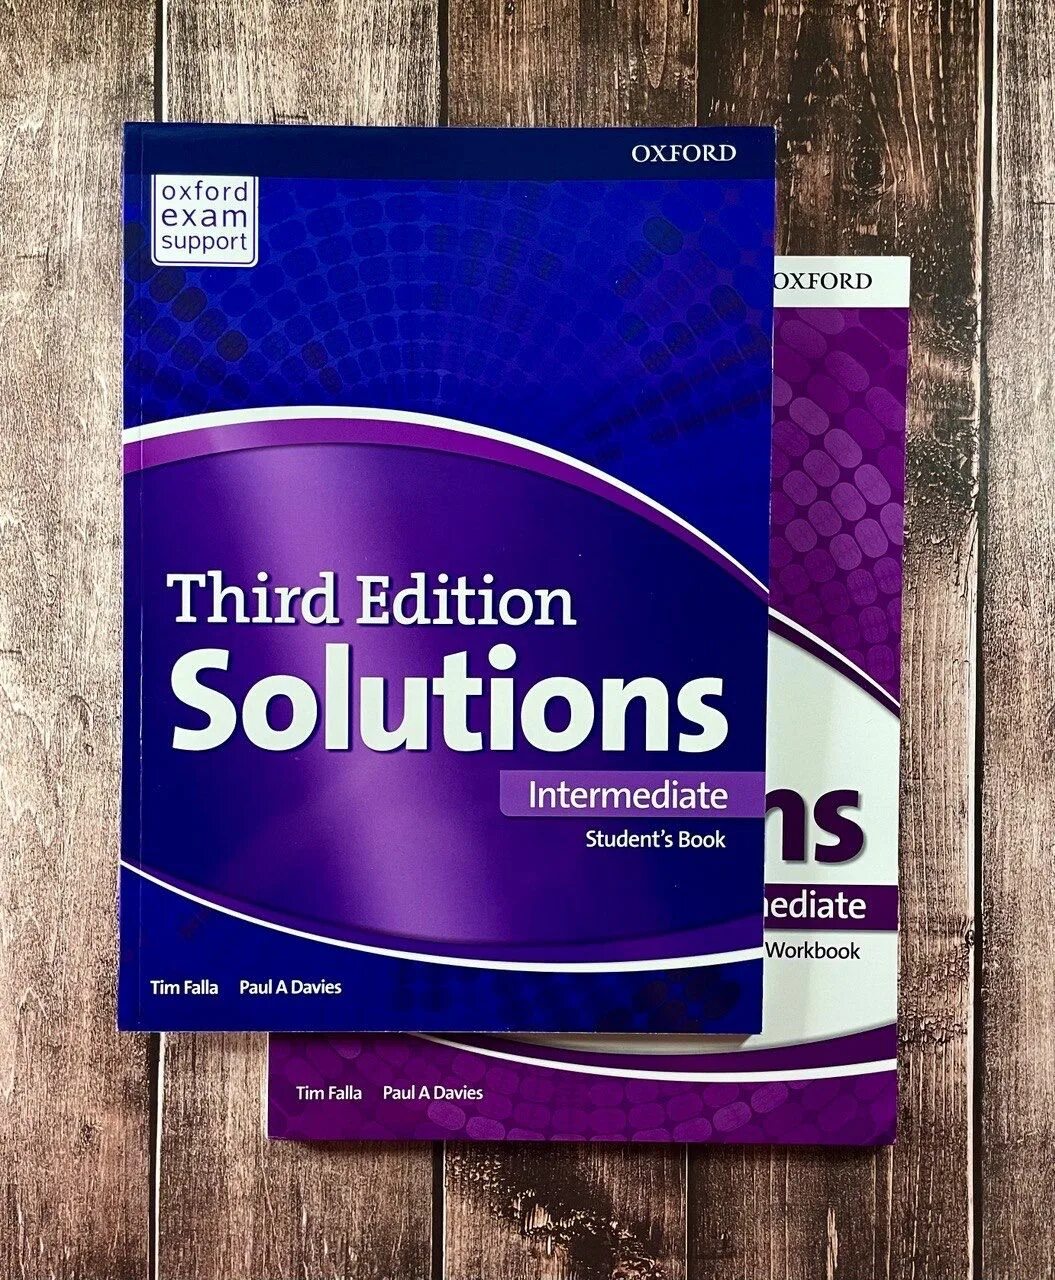 Английский solutions intermediate student book. Solutions pre-Intermediate 3rd Edition. Intermediate solutions Intermediate. Solutions Intermediate 3rd Edition. Third Edition solutions Intermediate Workbook.